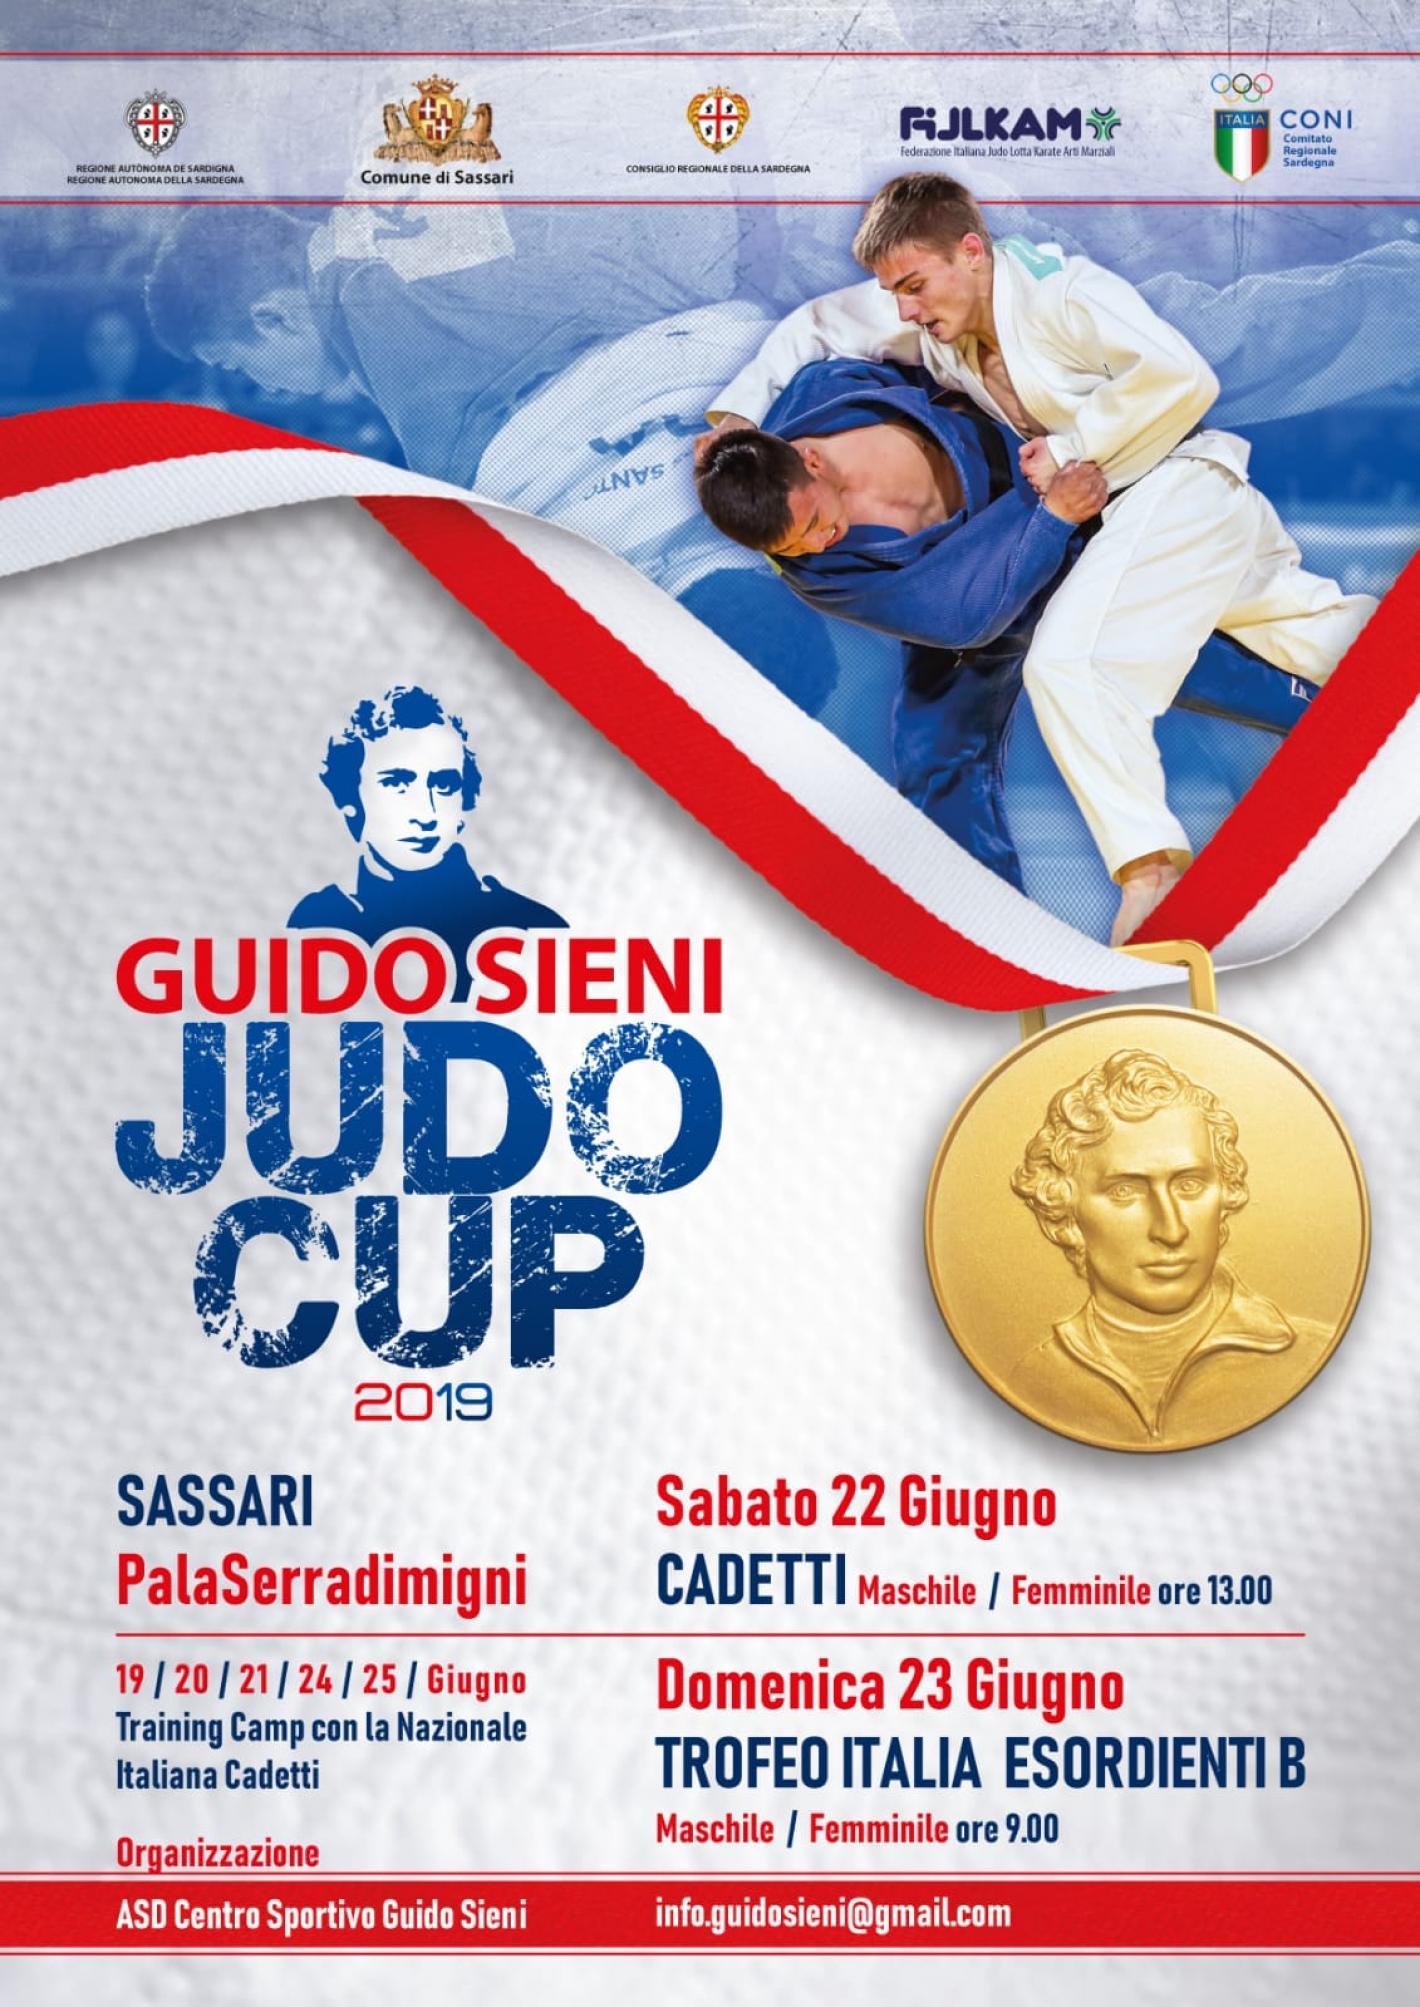 images/veneto/Judo/Gallery_Judo_2019/medium/guidosieni.jpg